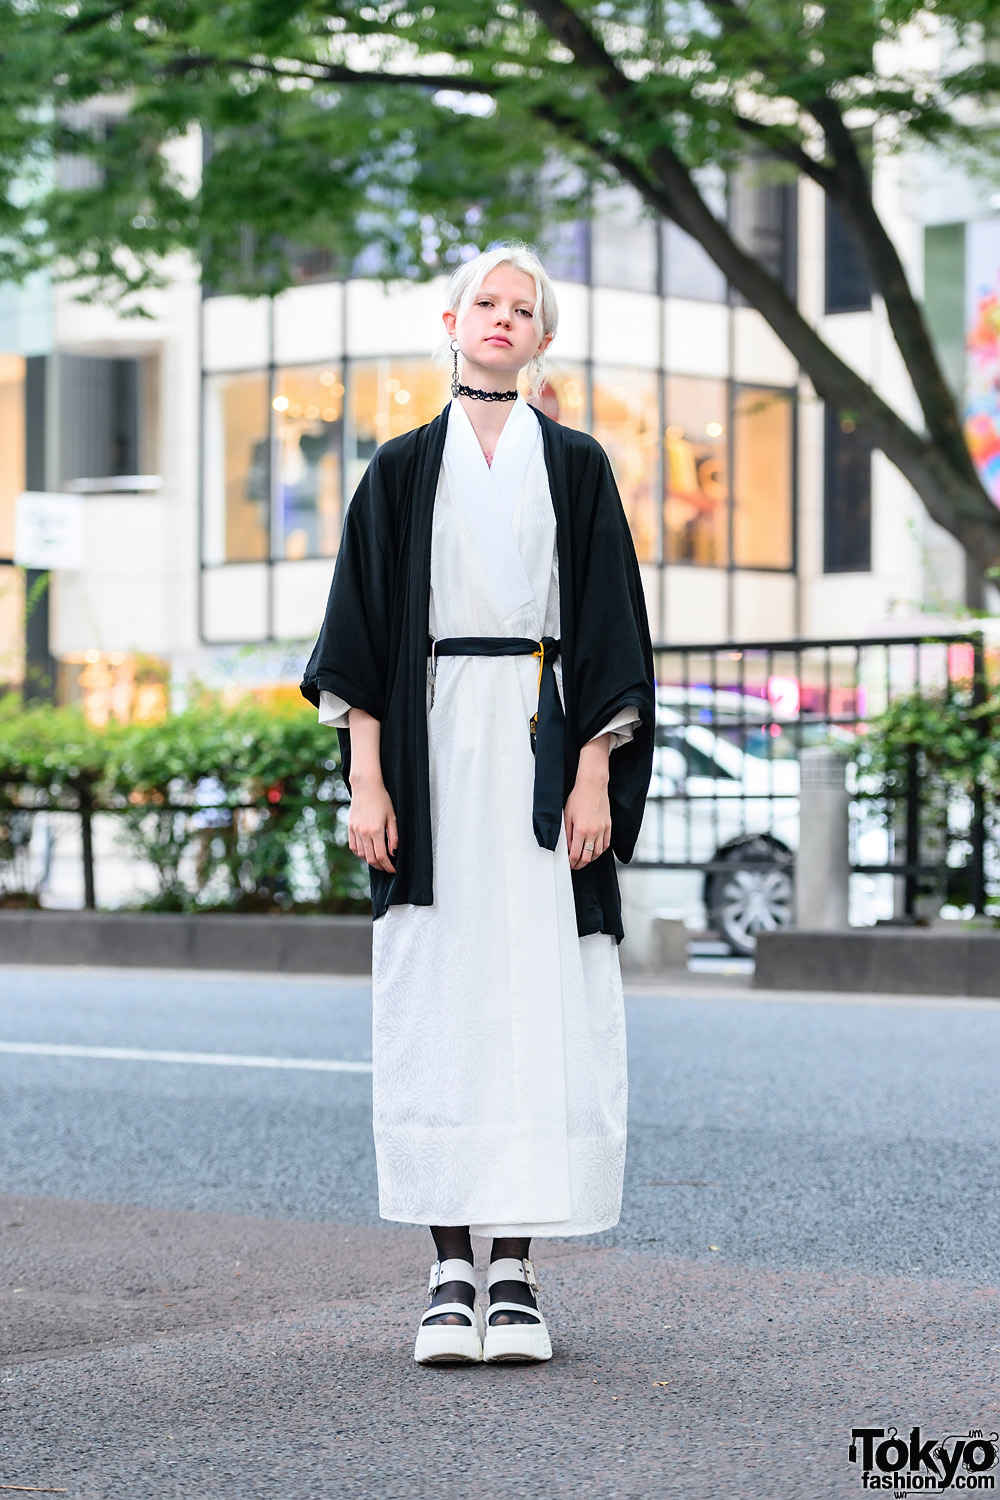 Tokyo Monochrome Kimono Street Style w/ Ash Blonde Bun, Mismatched Earrings, Tattoo Choker, Printed Kimono & Platform Sandals